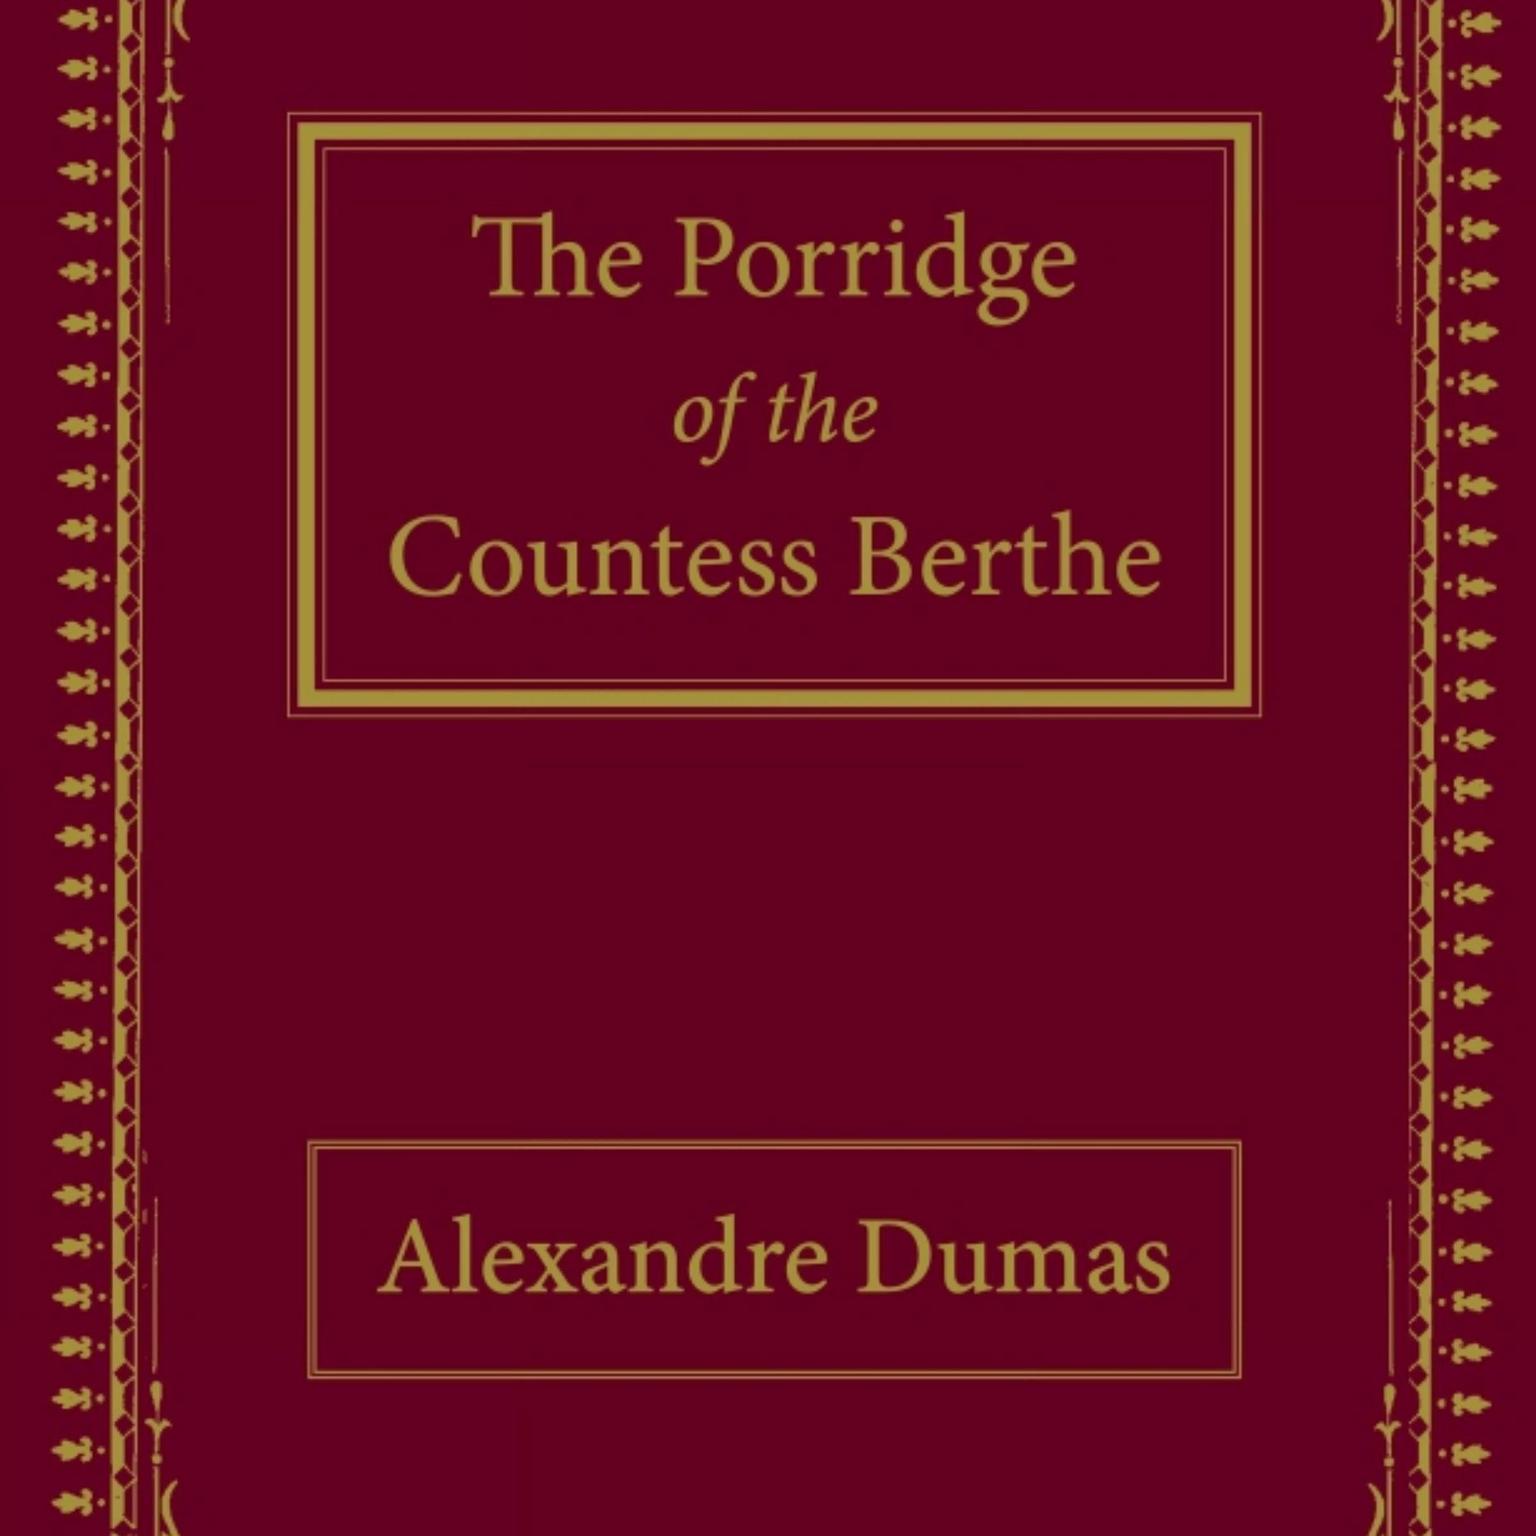 The Porridge of the Countess Berthe: Classic goblin tale Audiobook, by Alexandre Dumas